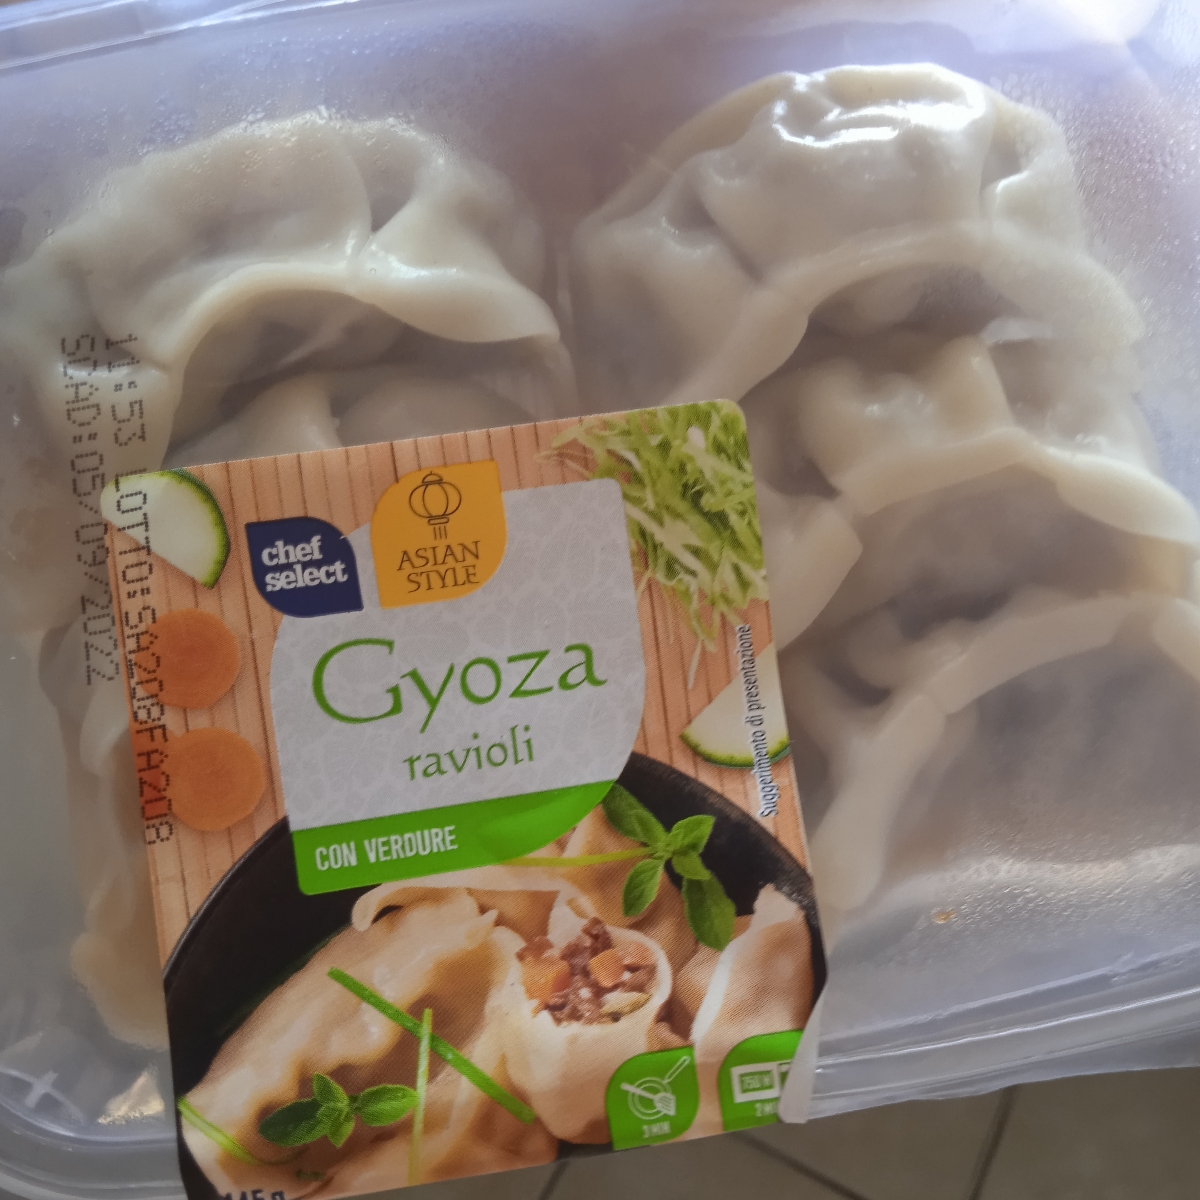 Chef Gyoza verdure Select abillion Review con ravioli Asian Style |